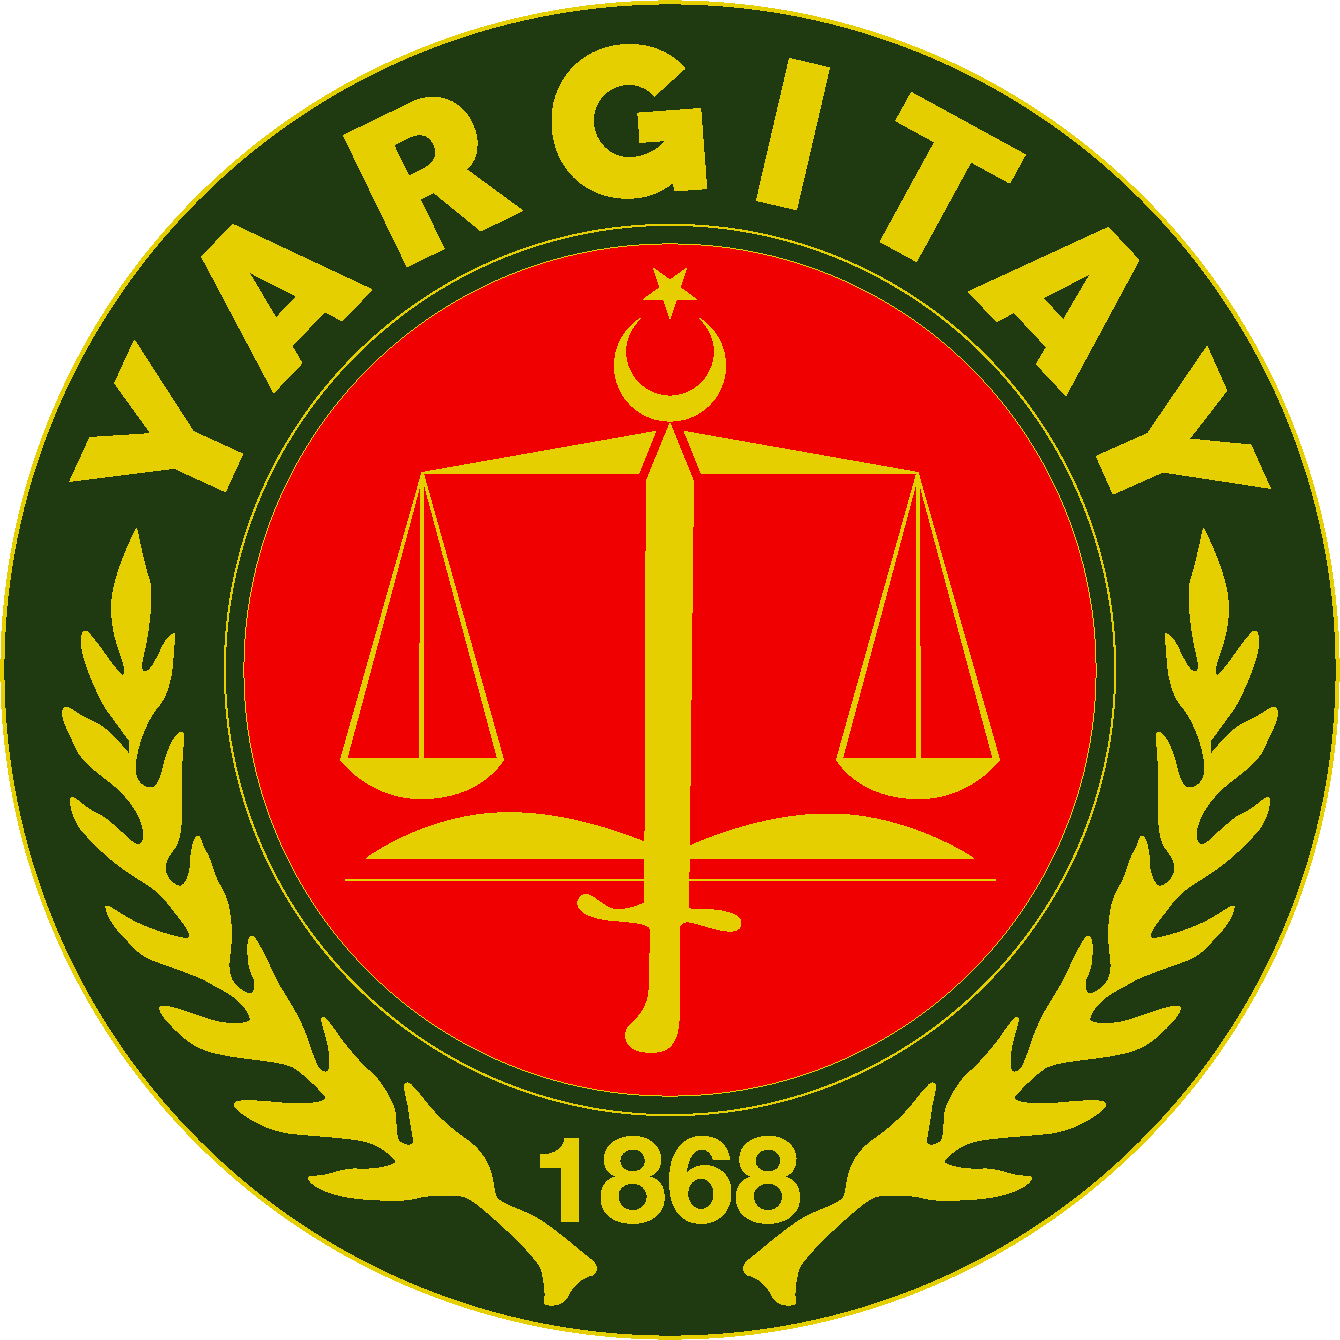 Yargıtay Logo png